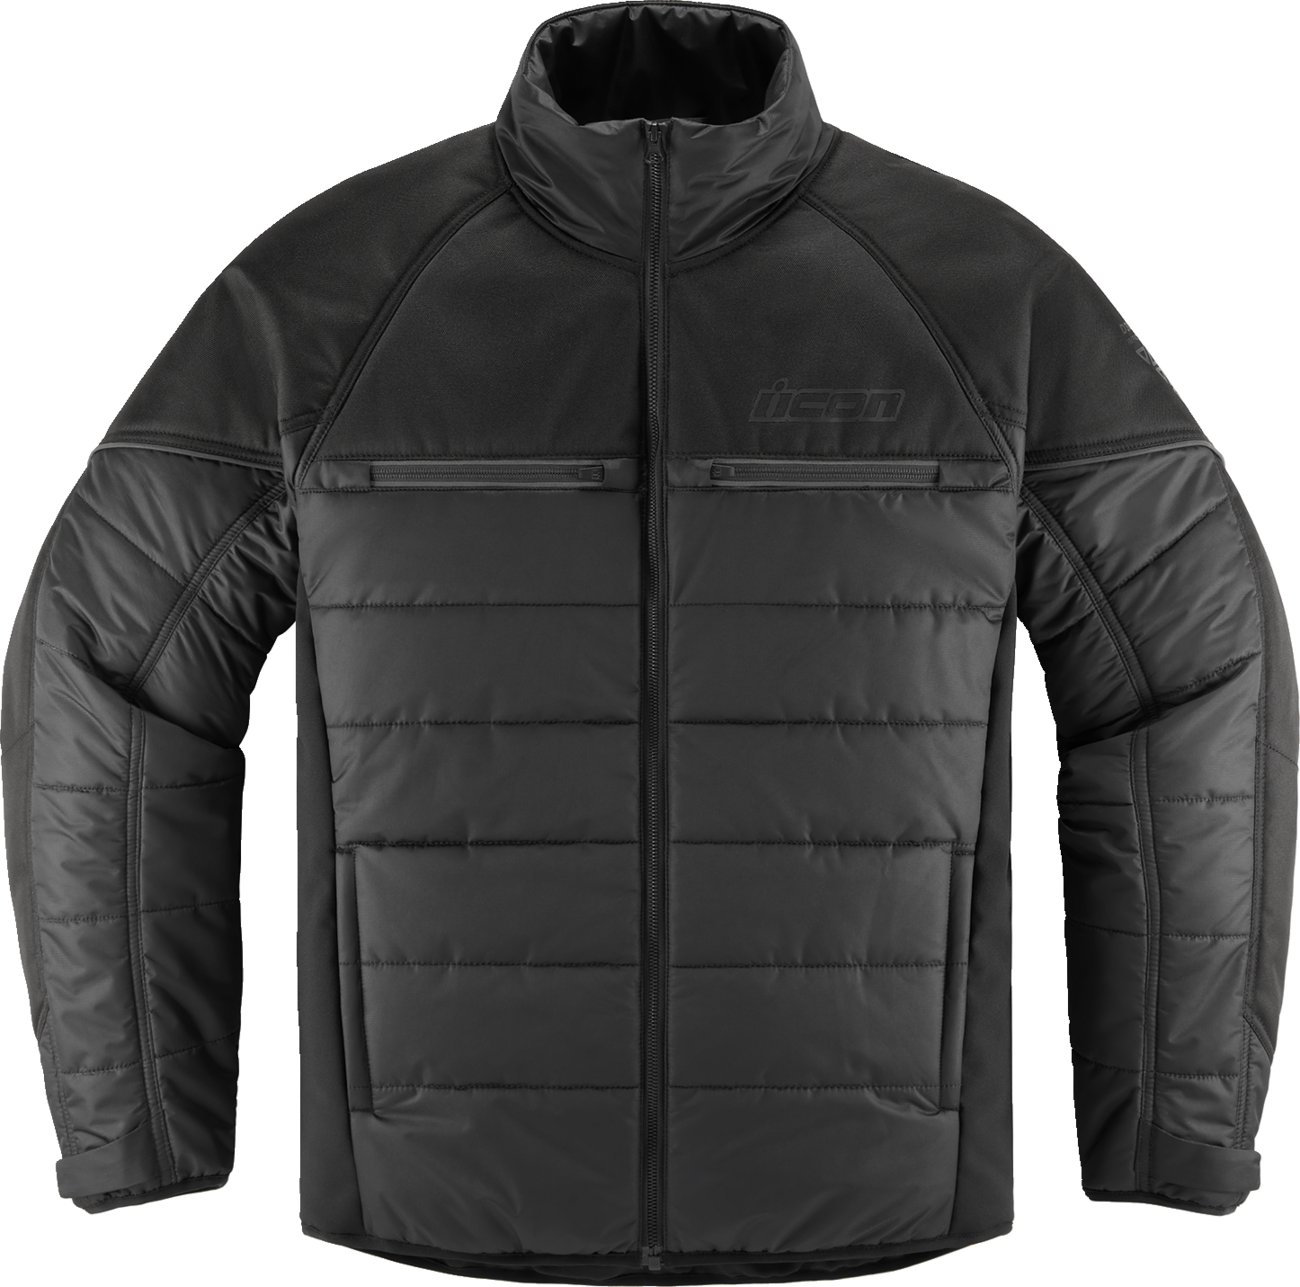 ICON Ghost Puffer Jacket - Black/Charcoal - Medium 2820-6191